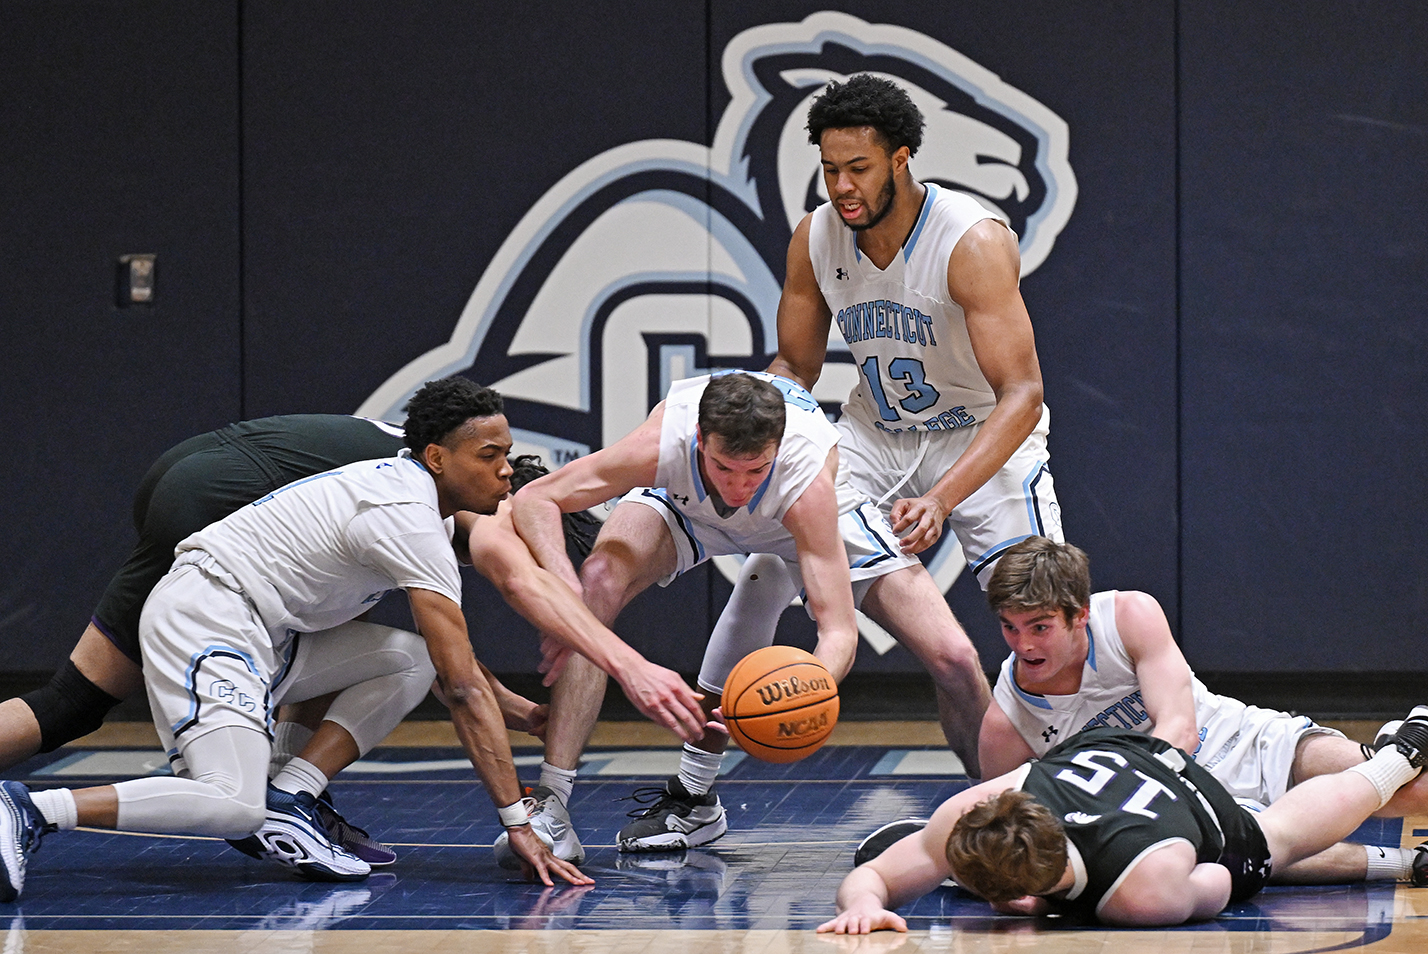 Basketball players scramble on floor for loose ball